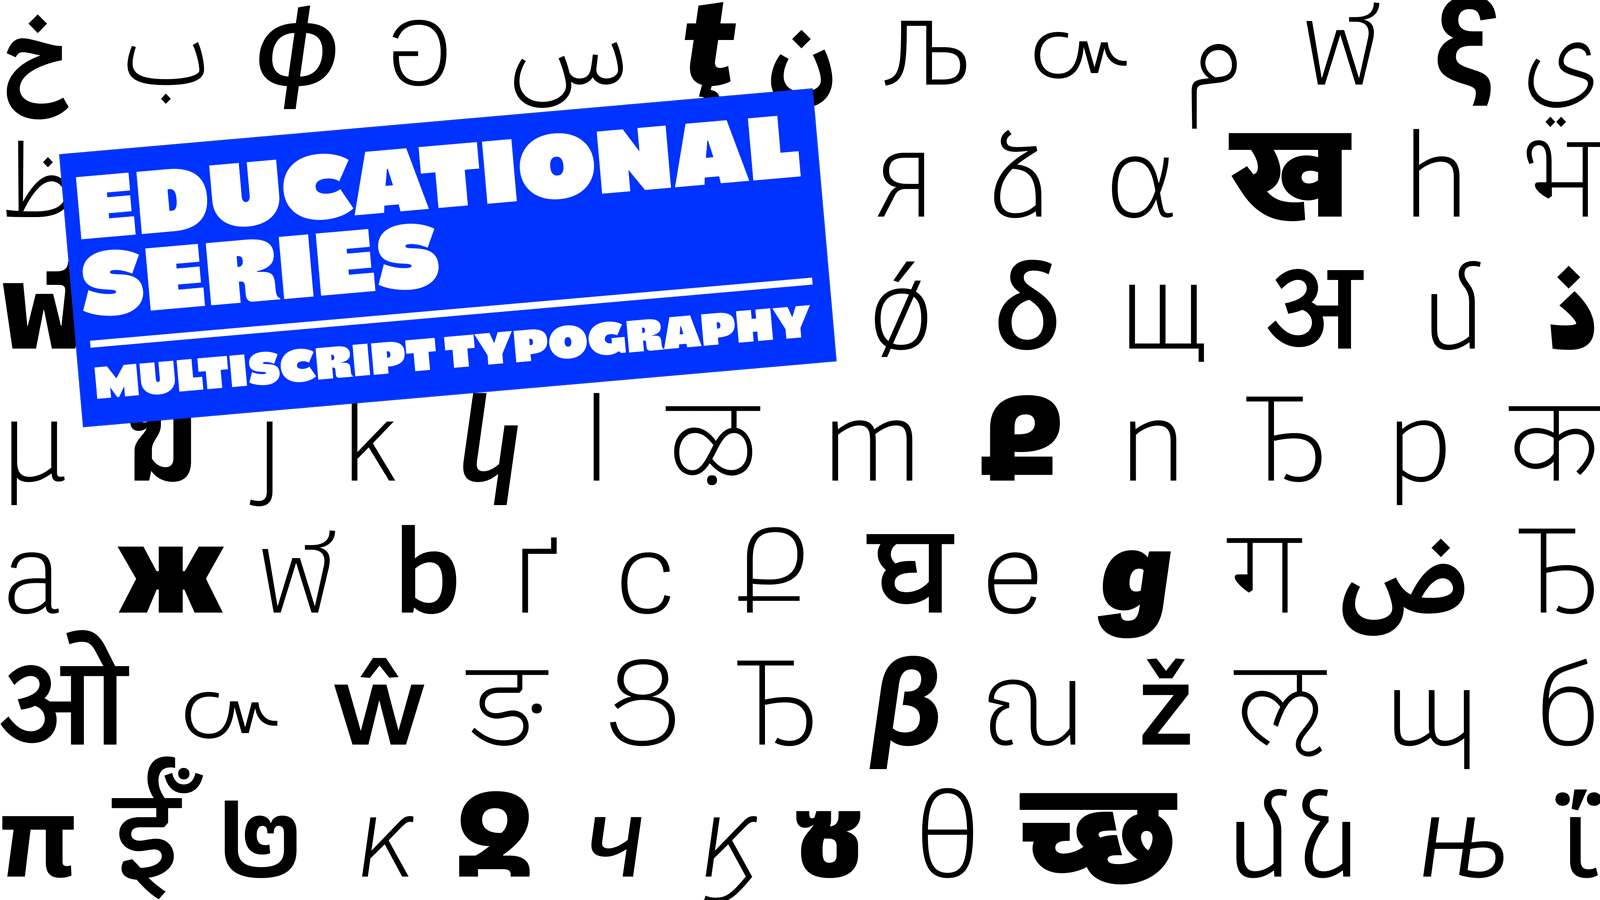 Beginner’s Guide to Multiscript Typography